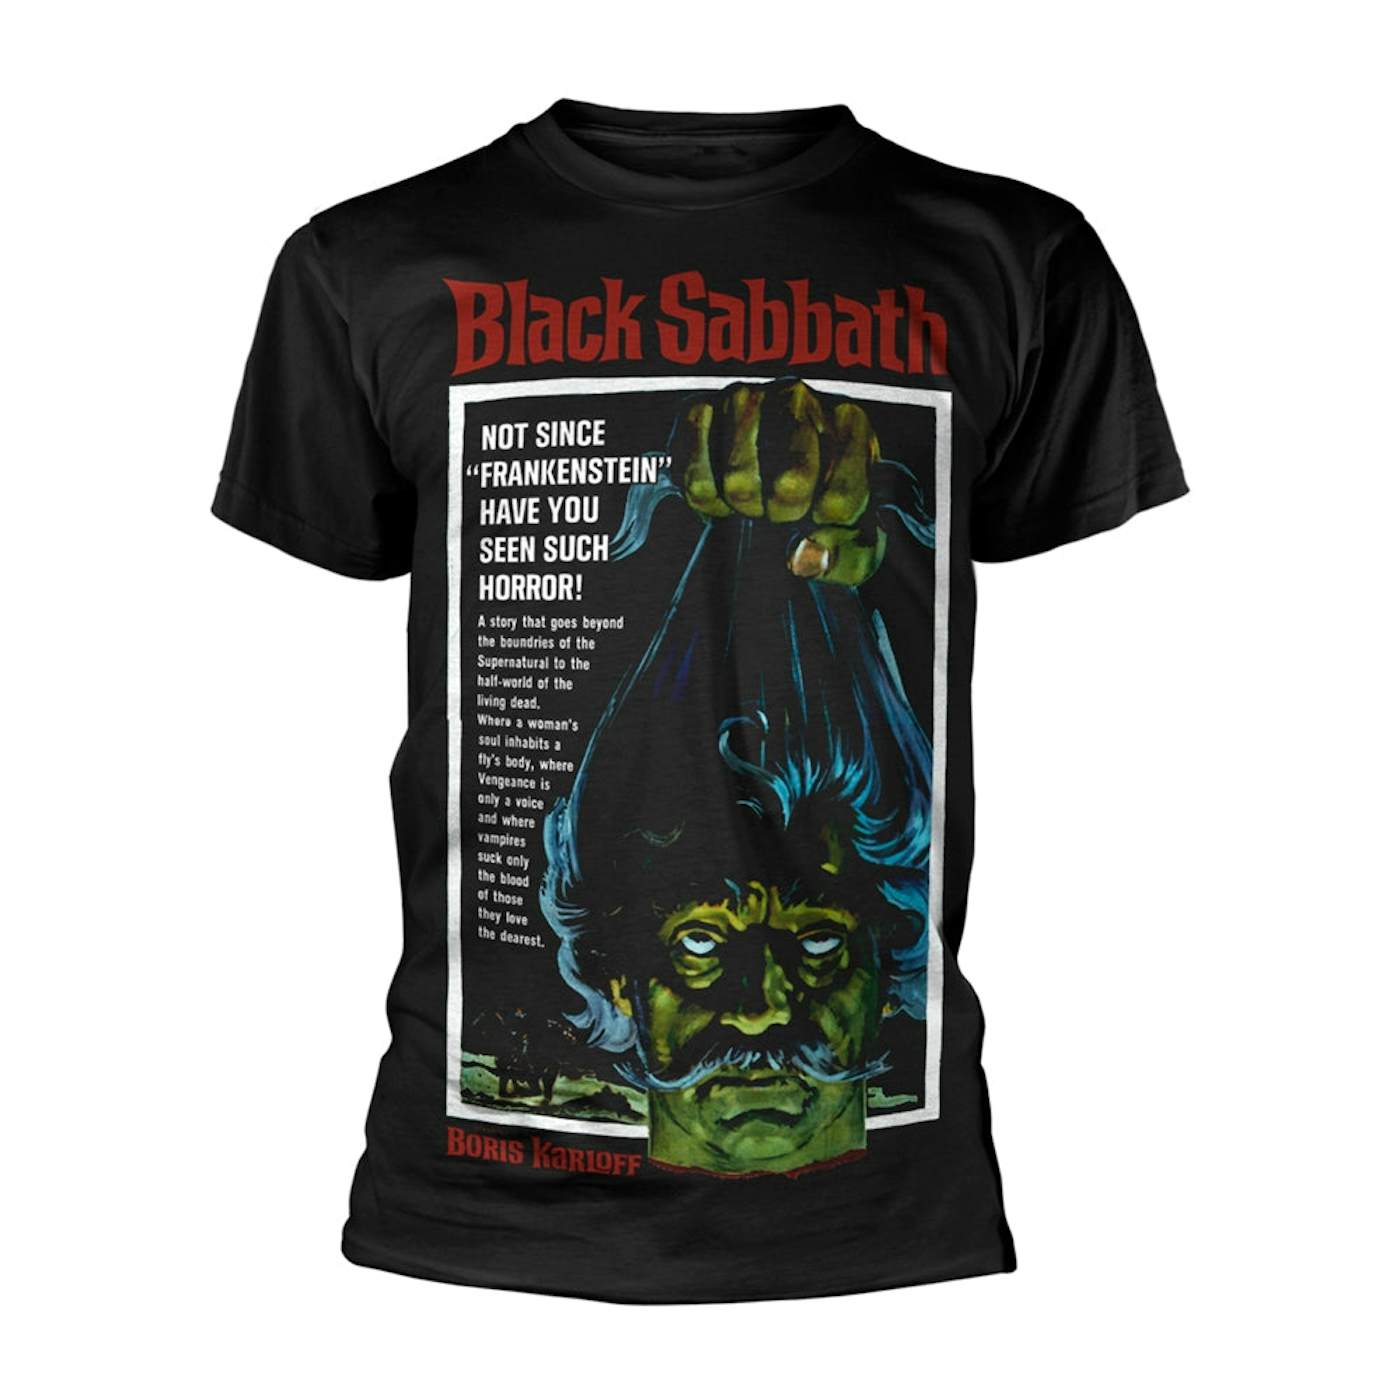 Black Sabbath T Shirt - Black Sabbath (Movie Poster)